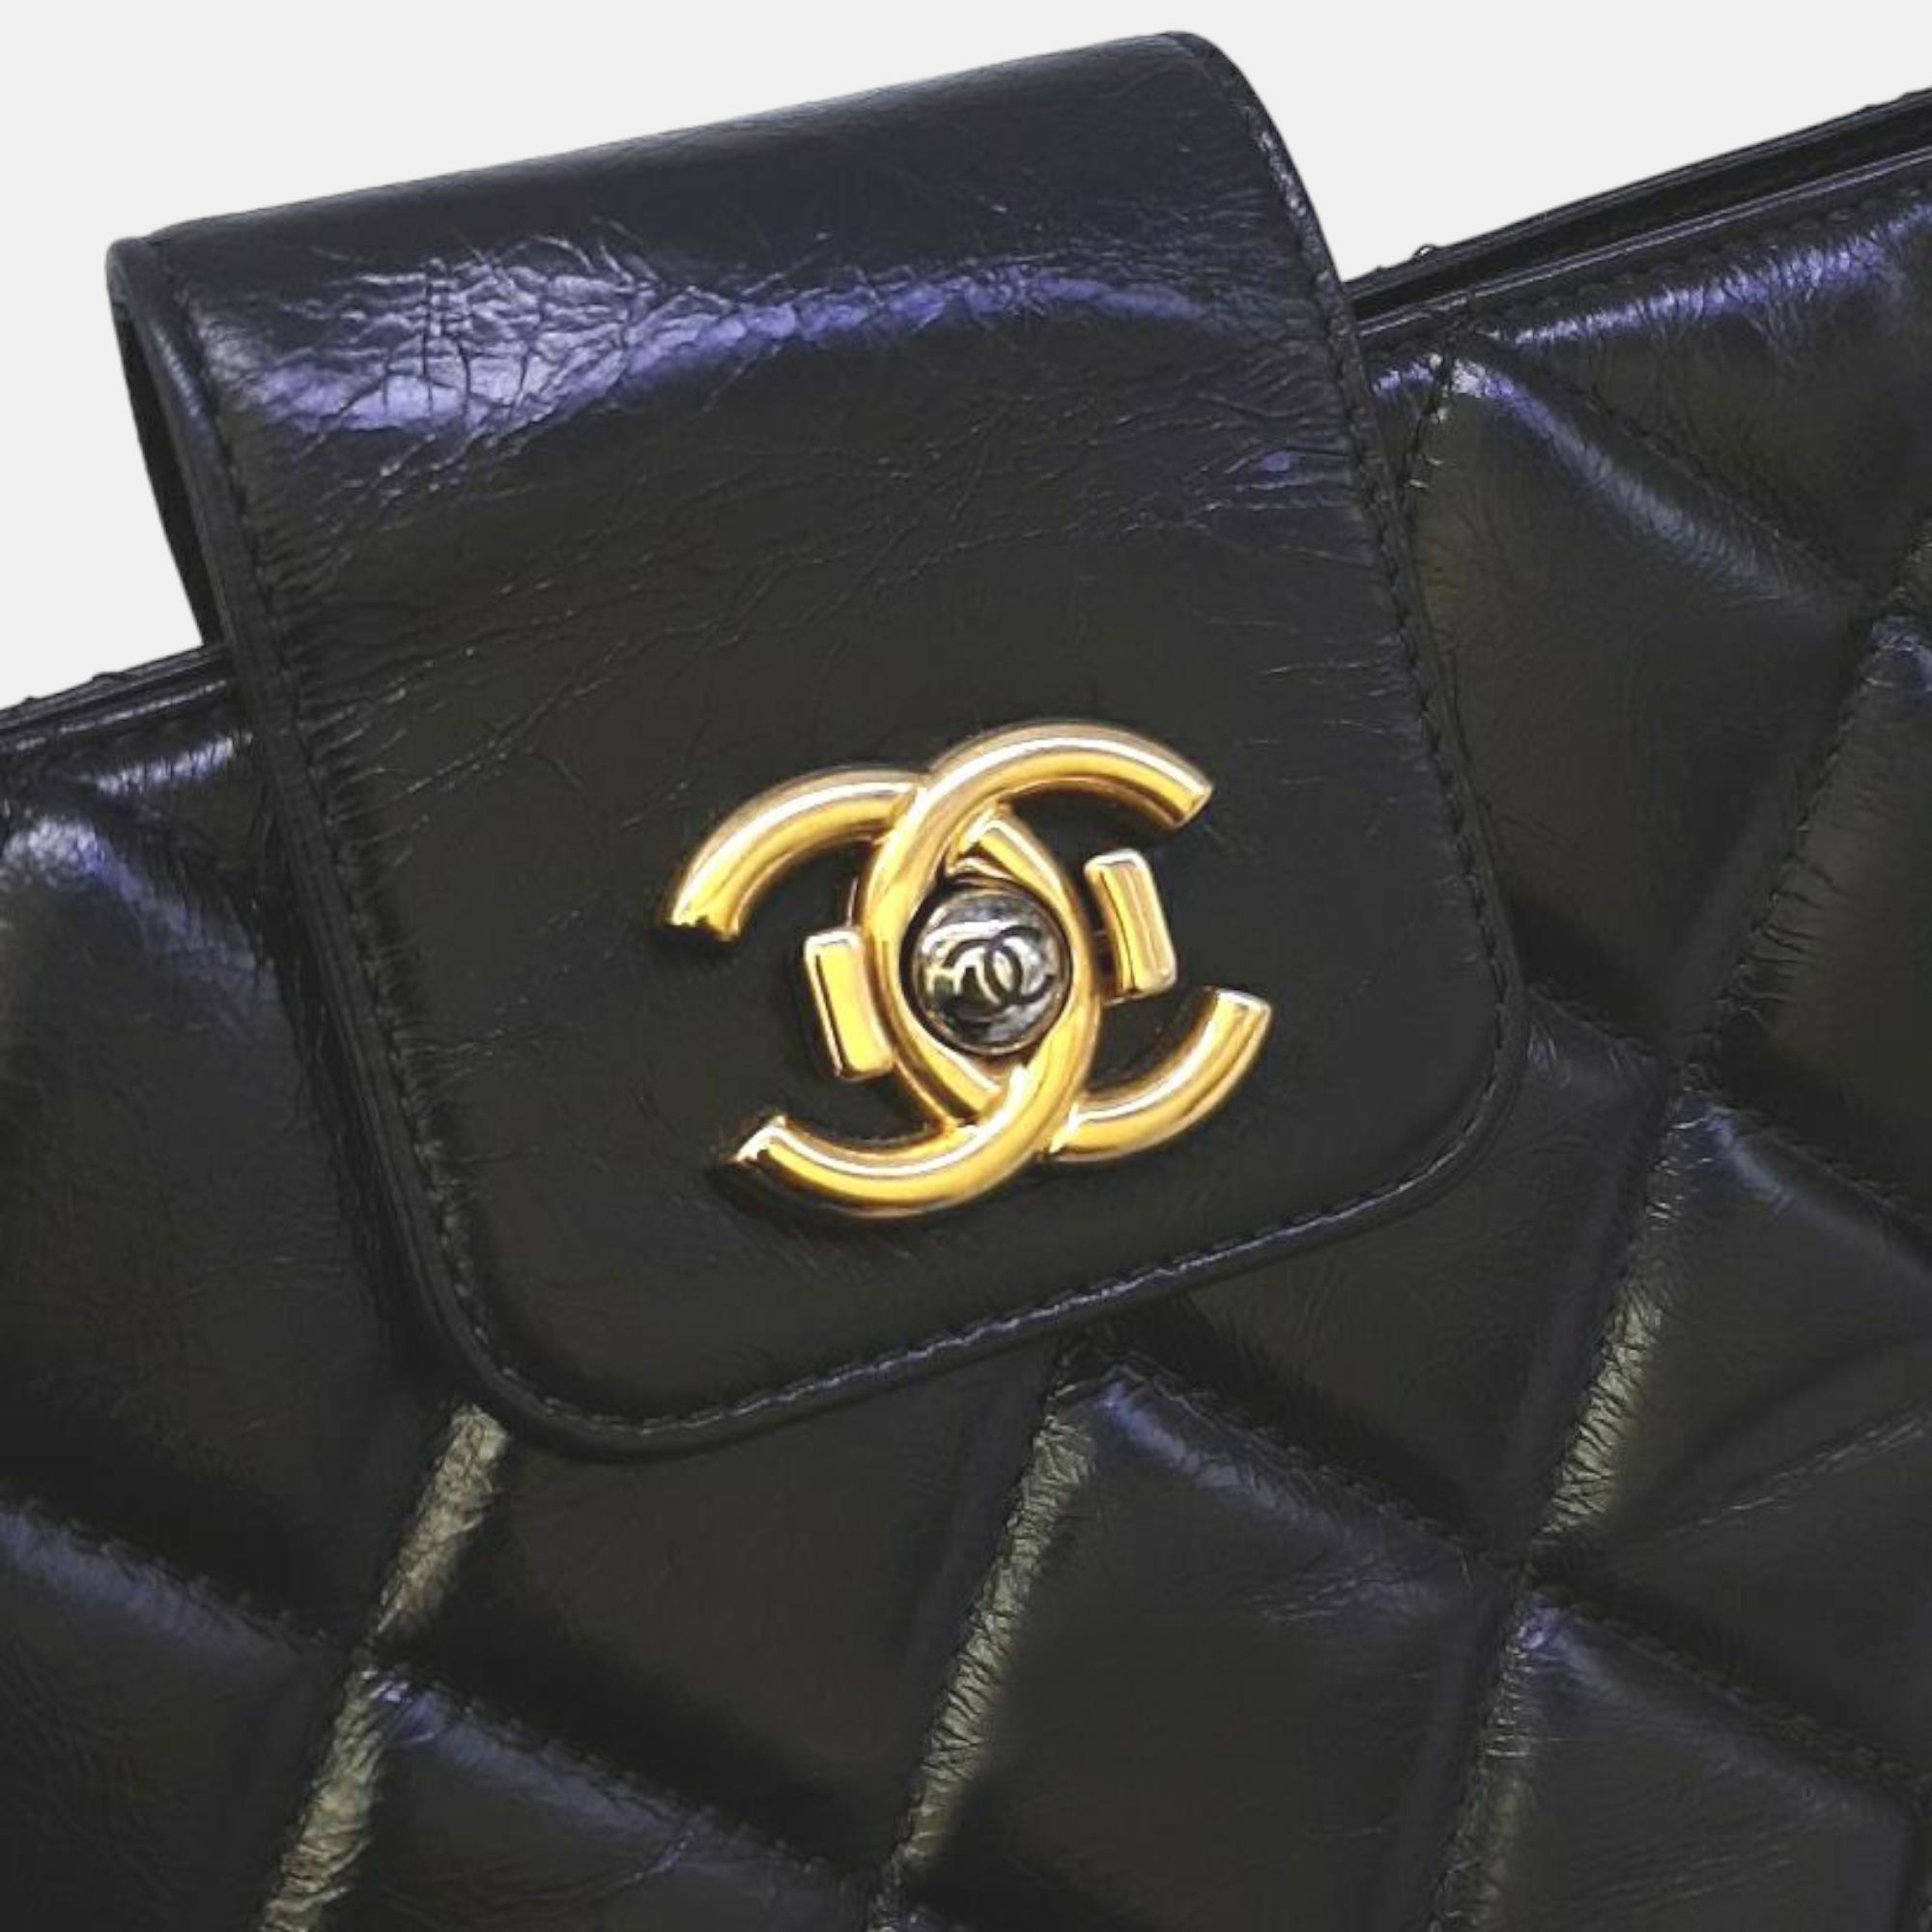 Chanel Black Leather Paris-Rome Gold Bar Tote Bag